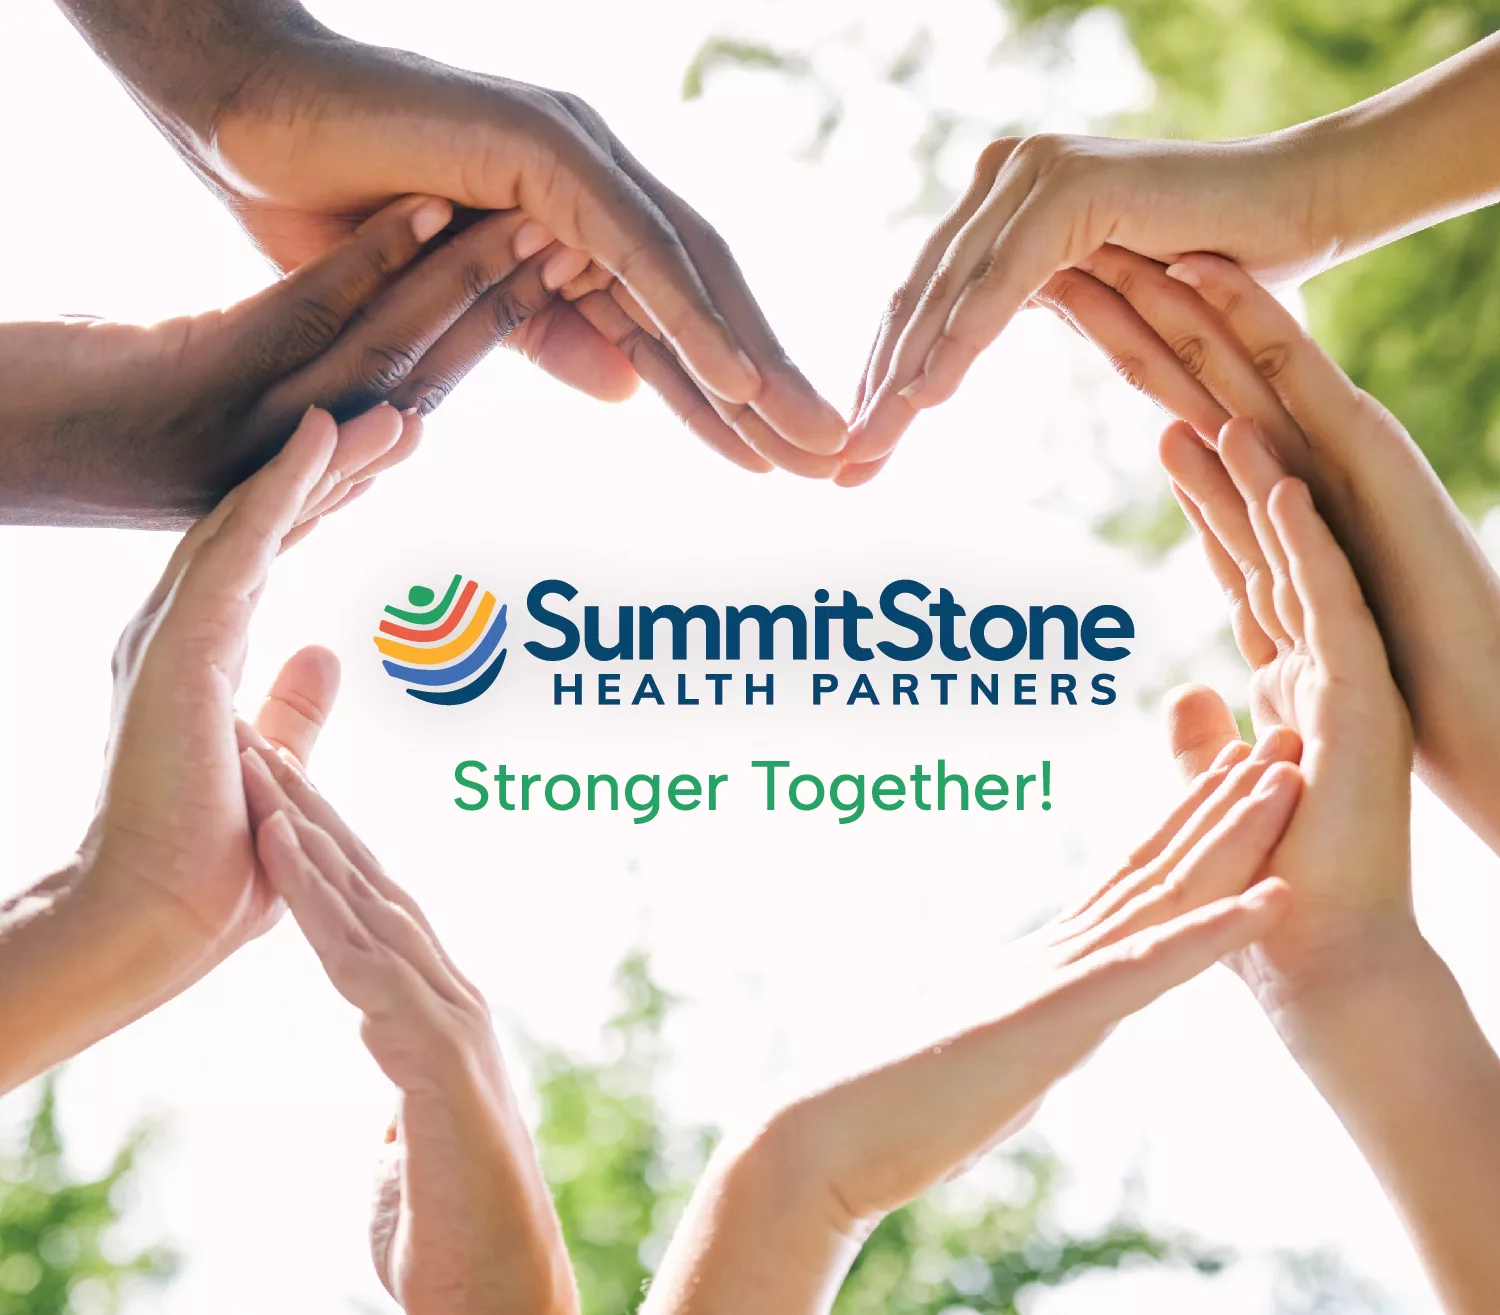 SummitStone Health Partners heart graphic